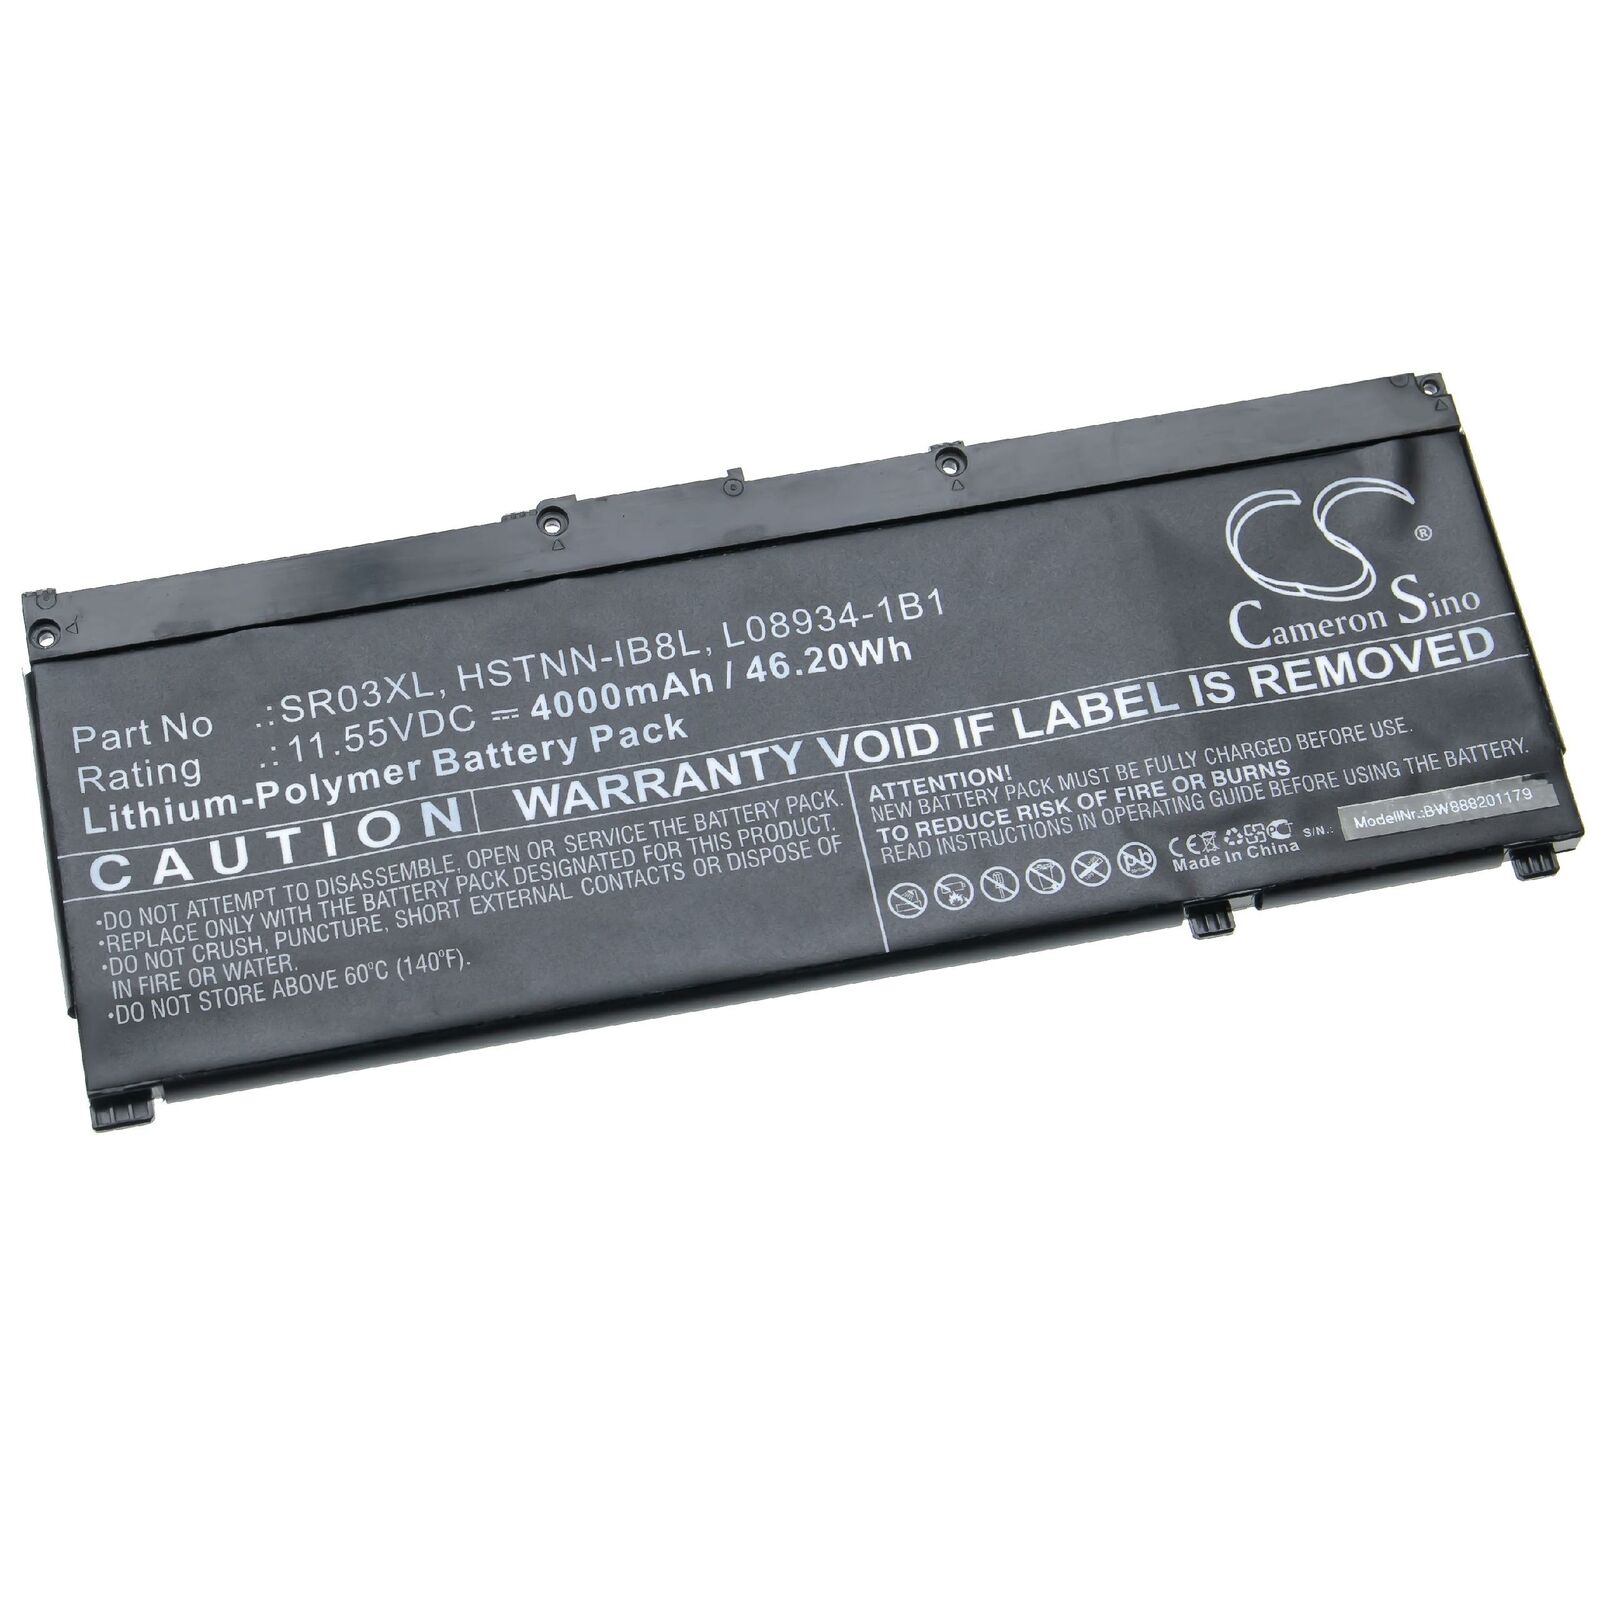 Batería para SR03XL Hp Pavilion Gaming 15-cx0000 HSTNN-DB8Q L08934-2B1(compatible)